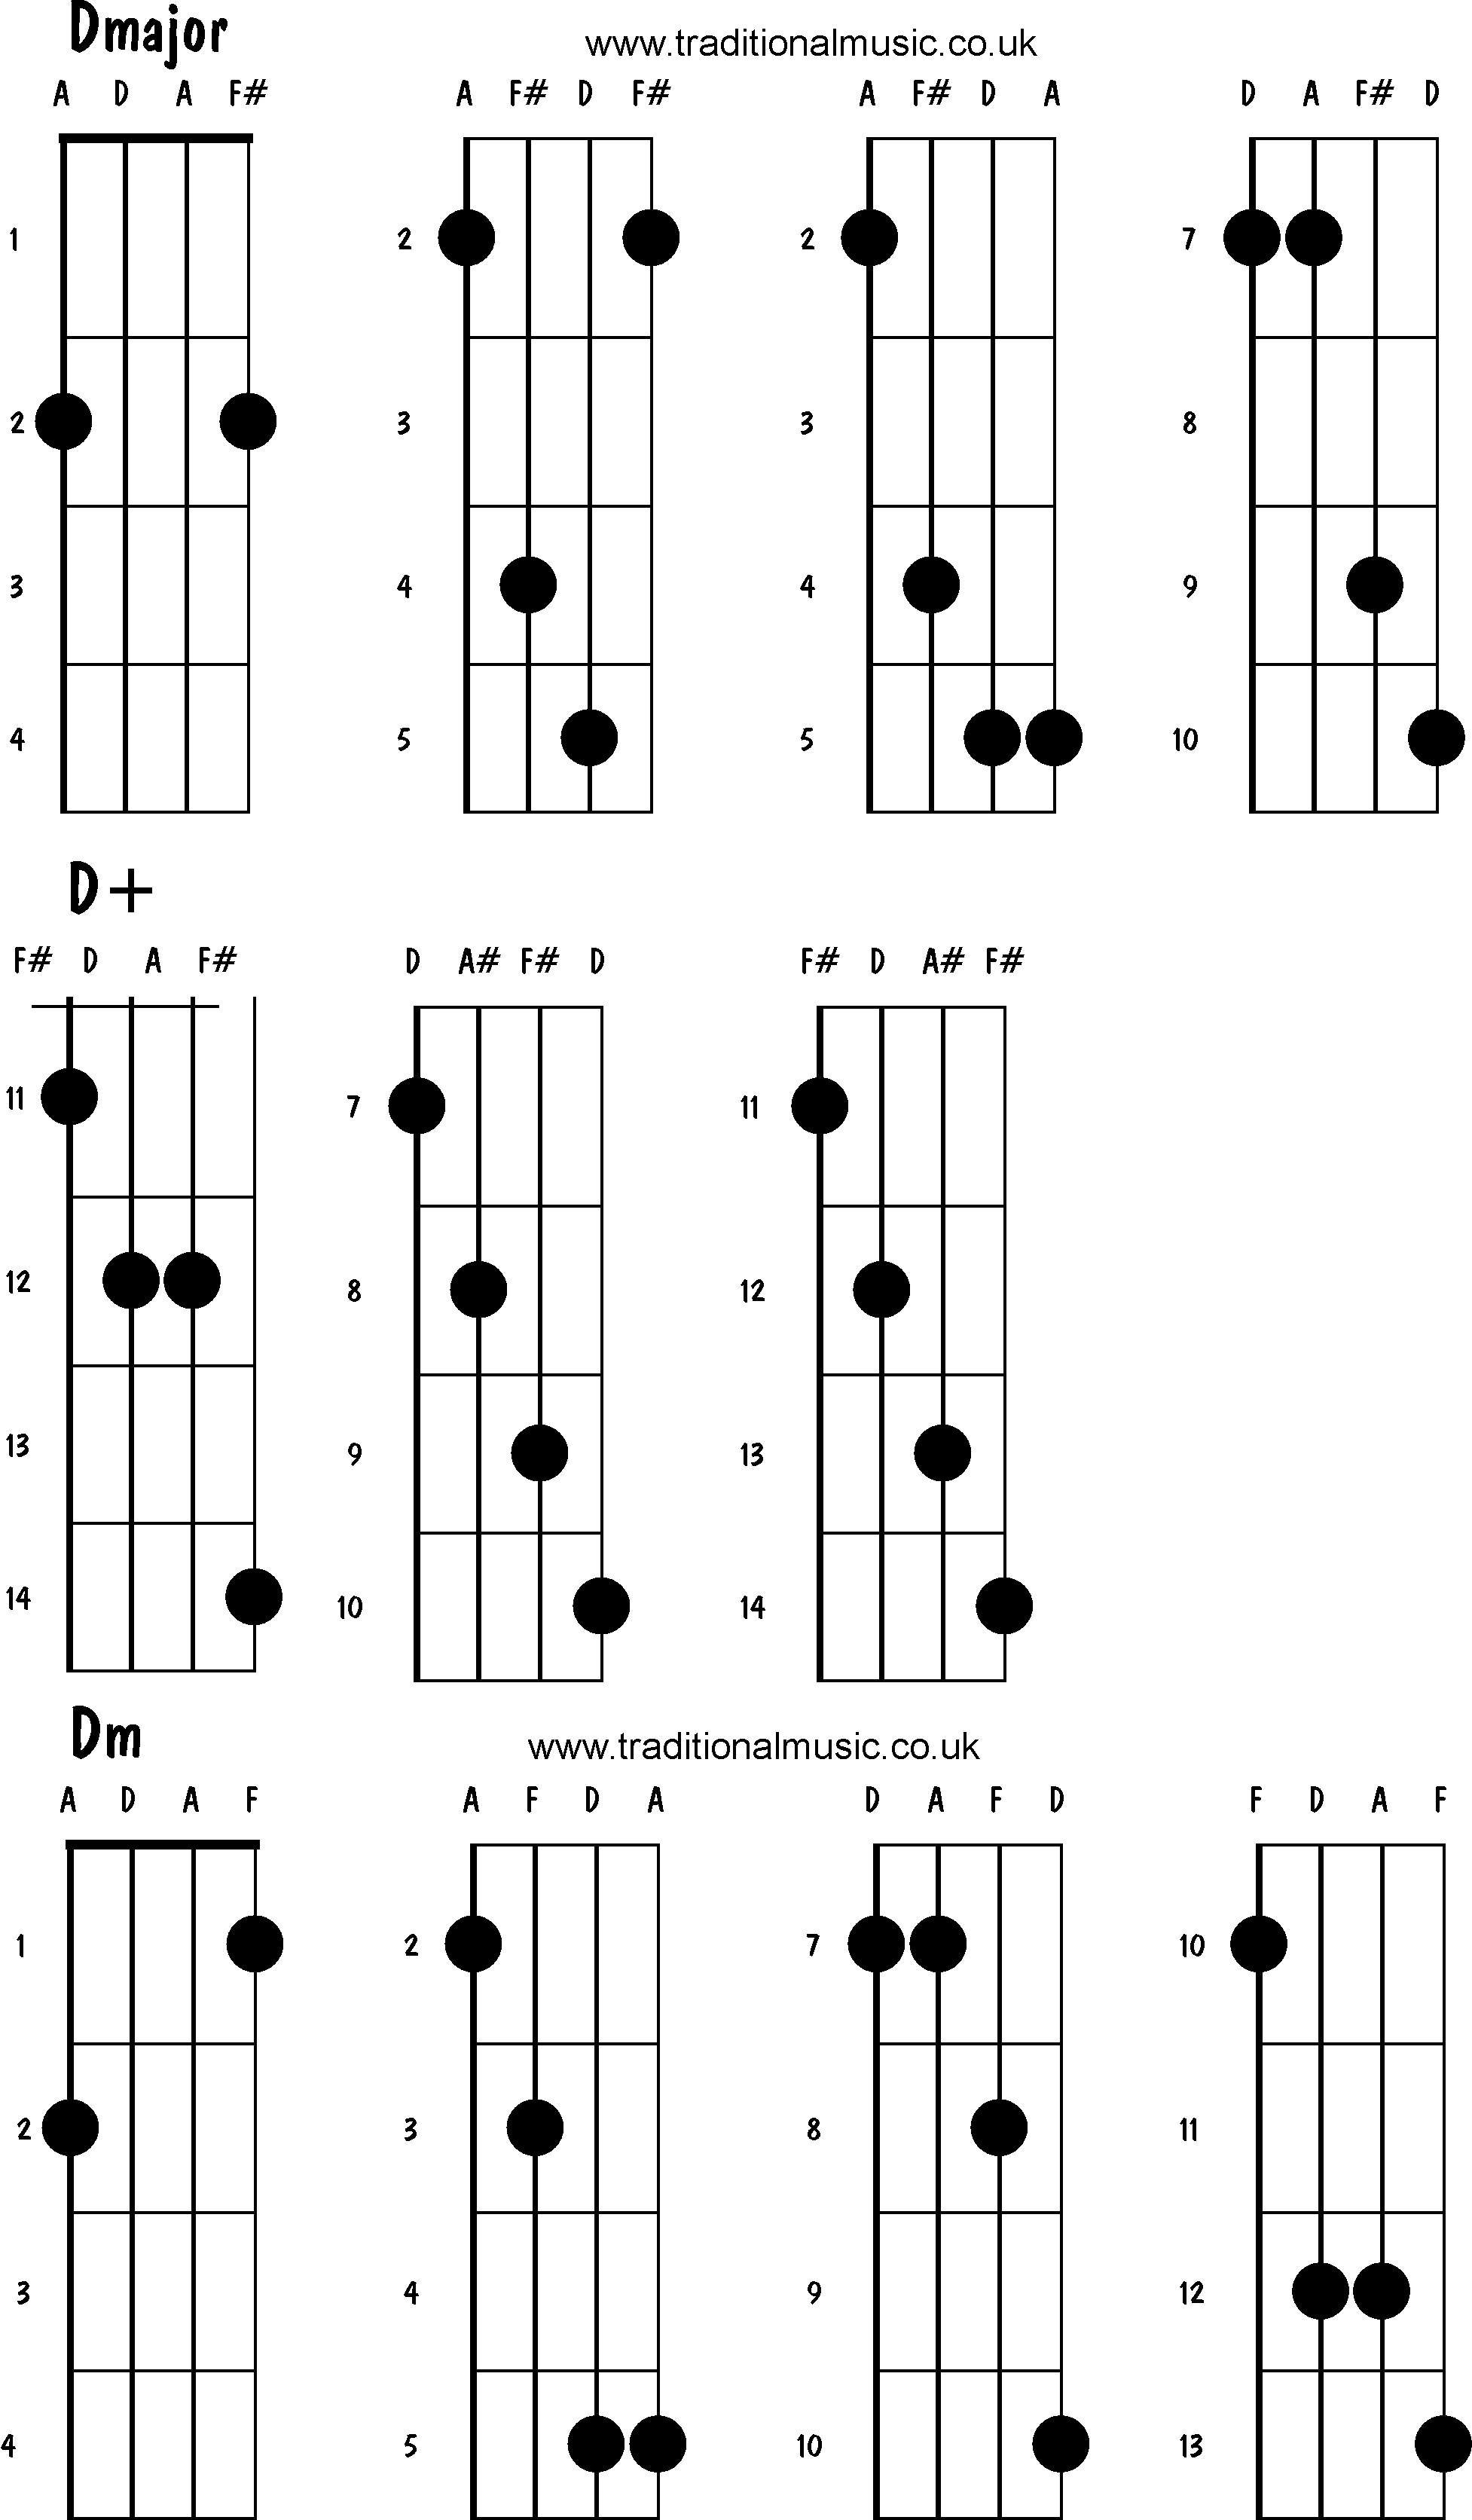 Advanced mandolin chords: Dmajor, D+, Dm